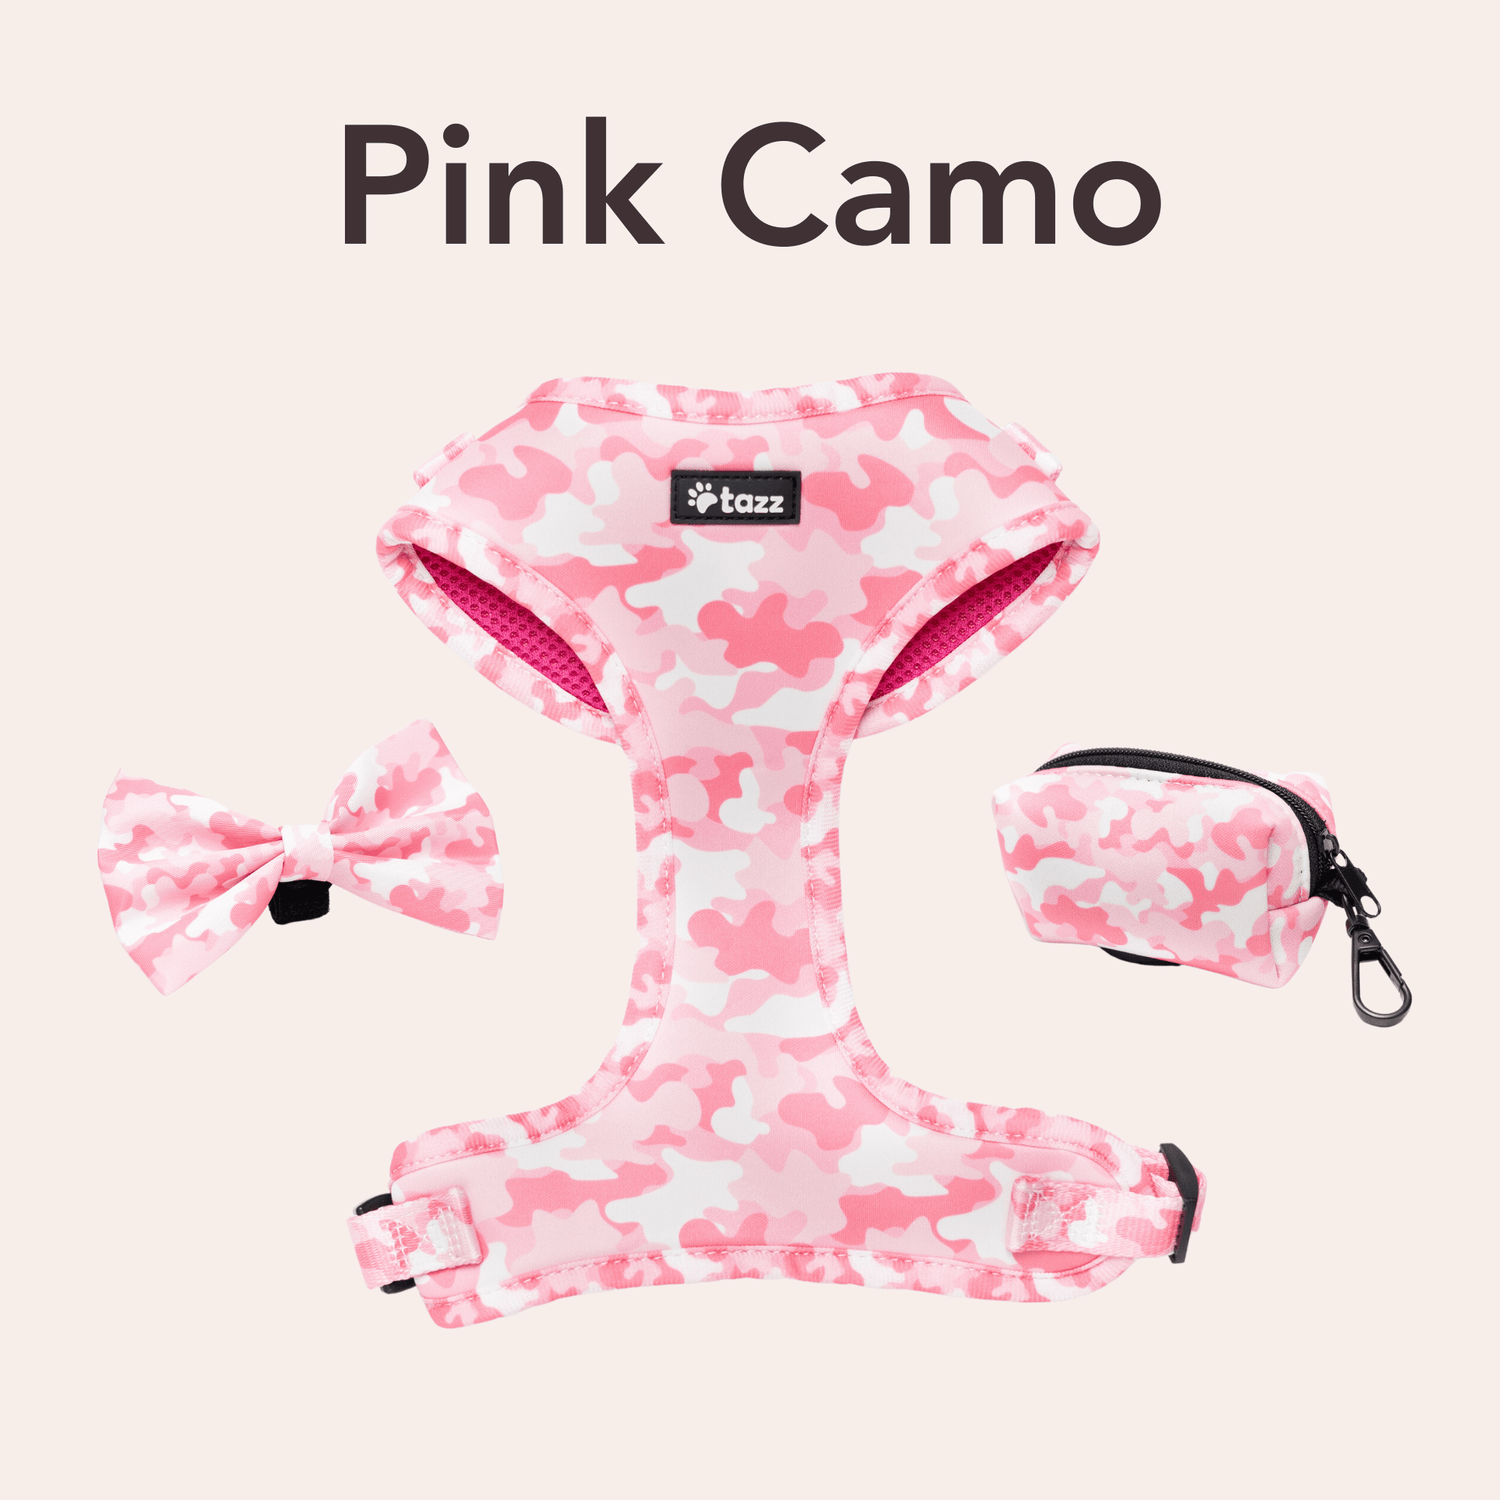 Pink Camo - Tazz